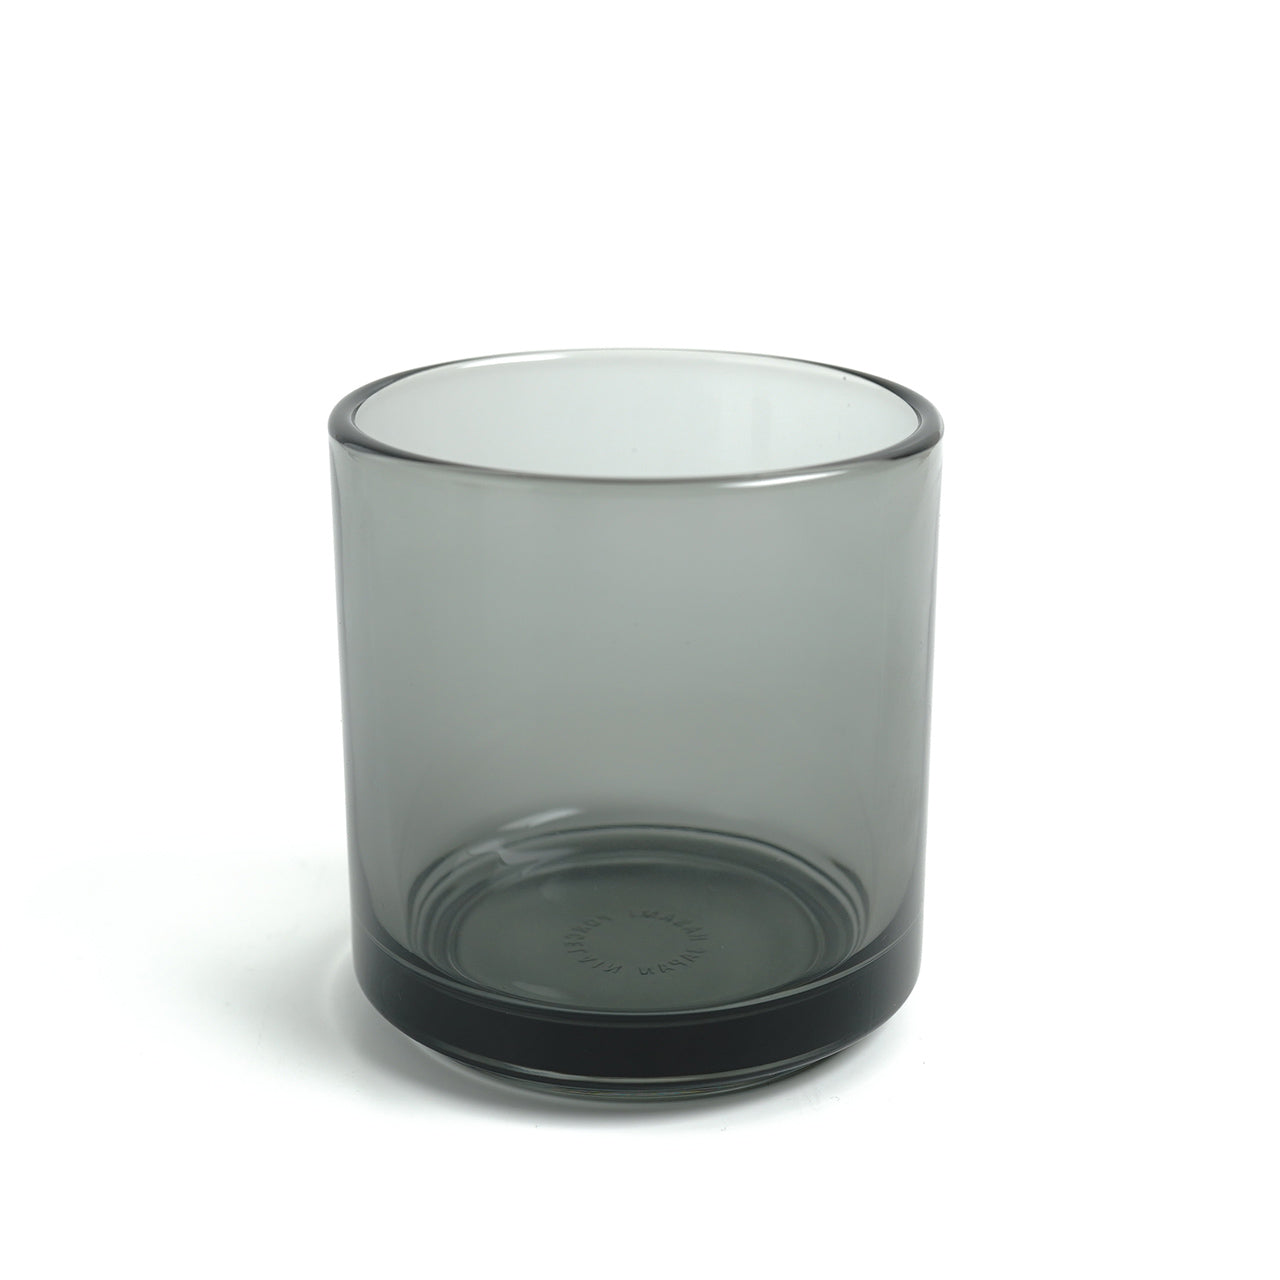 HASAMI PORCELAIN ハサミポーセリン タンブラー TUMBLER 350ml 日本製 西海陶器 ガラス グラス HPGLC HPGLM HPGLA